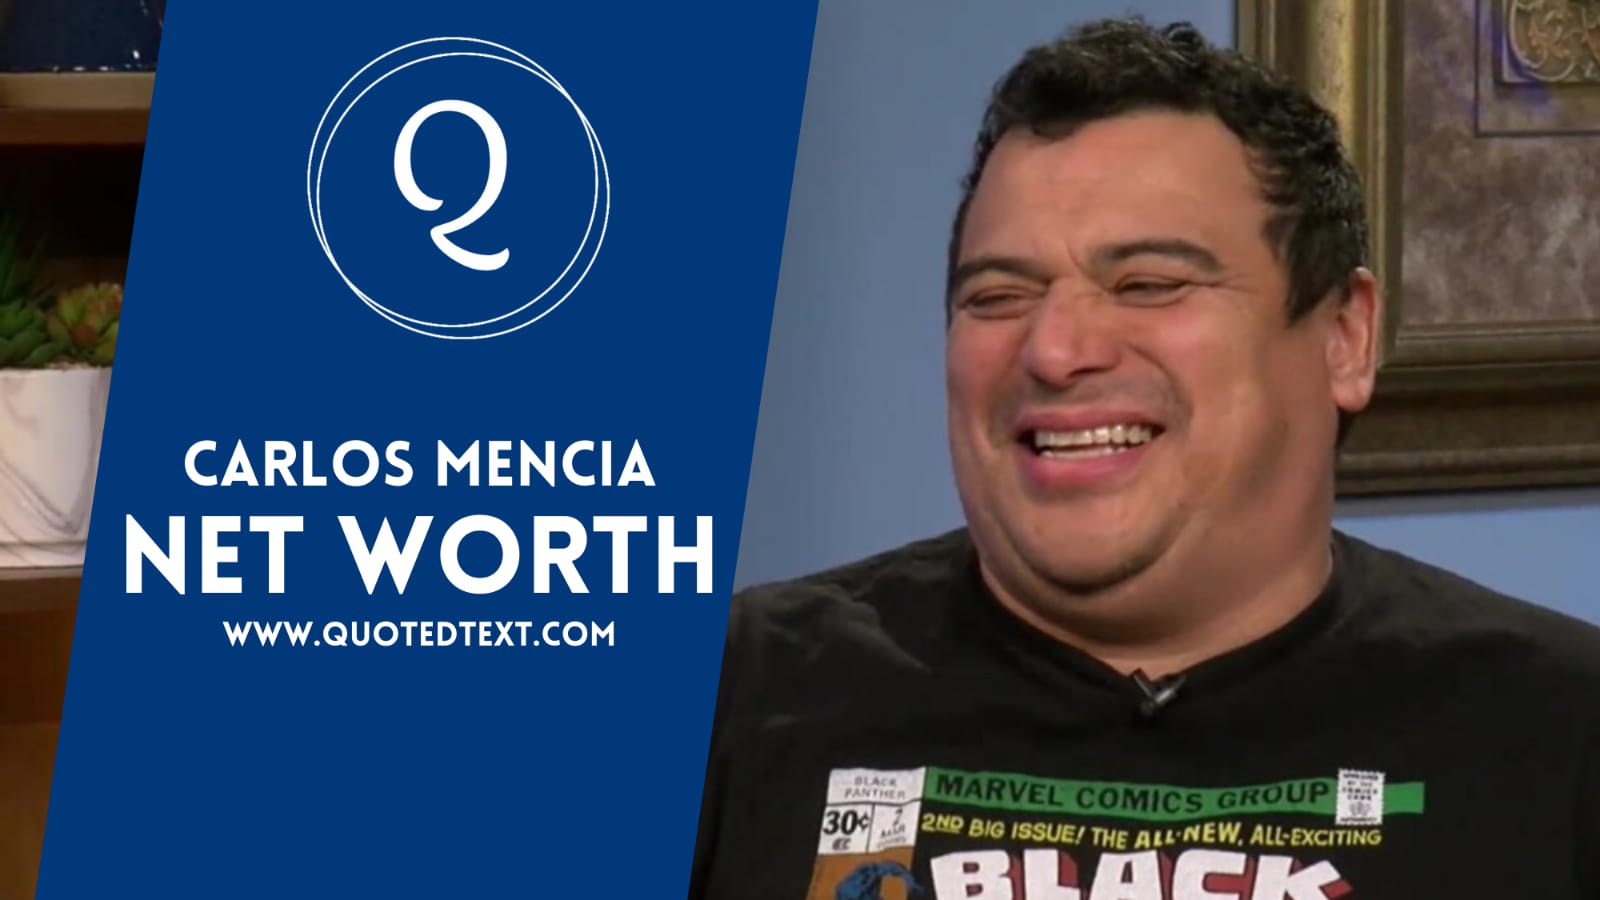 Carlos Mencia Net Worth